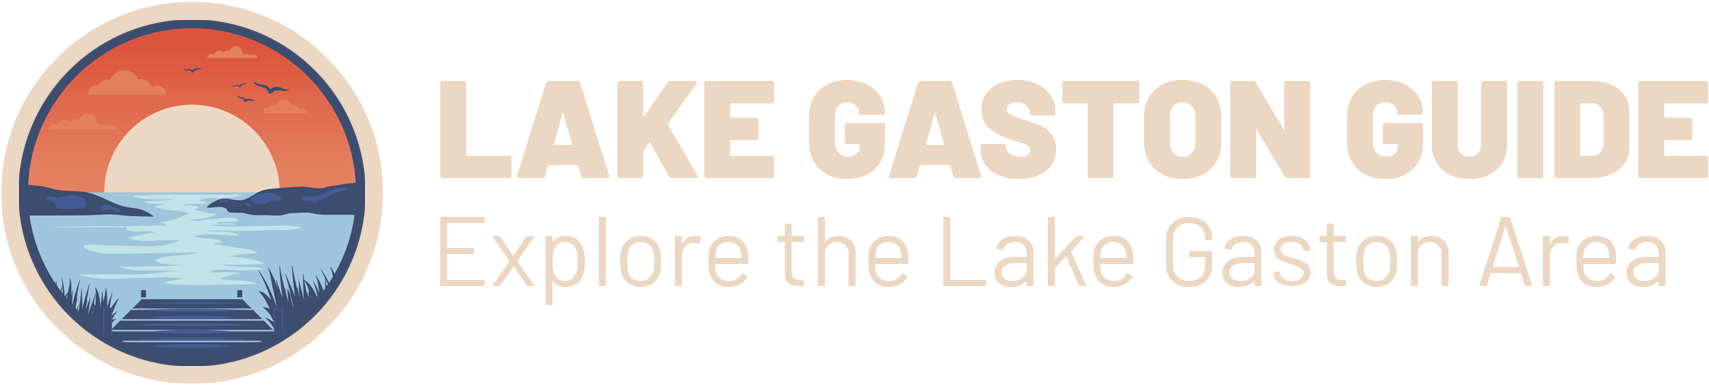 Lake Gaston Guide